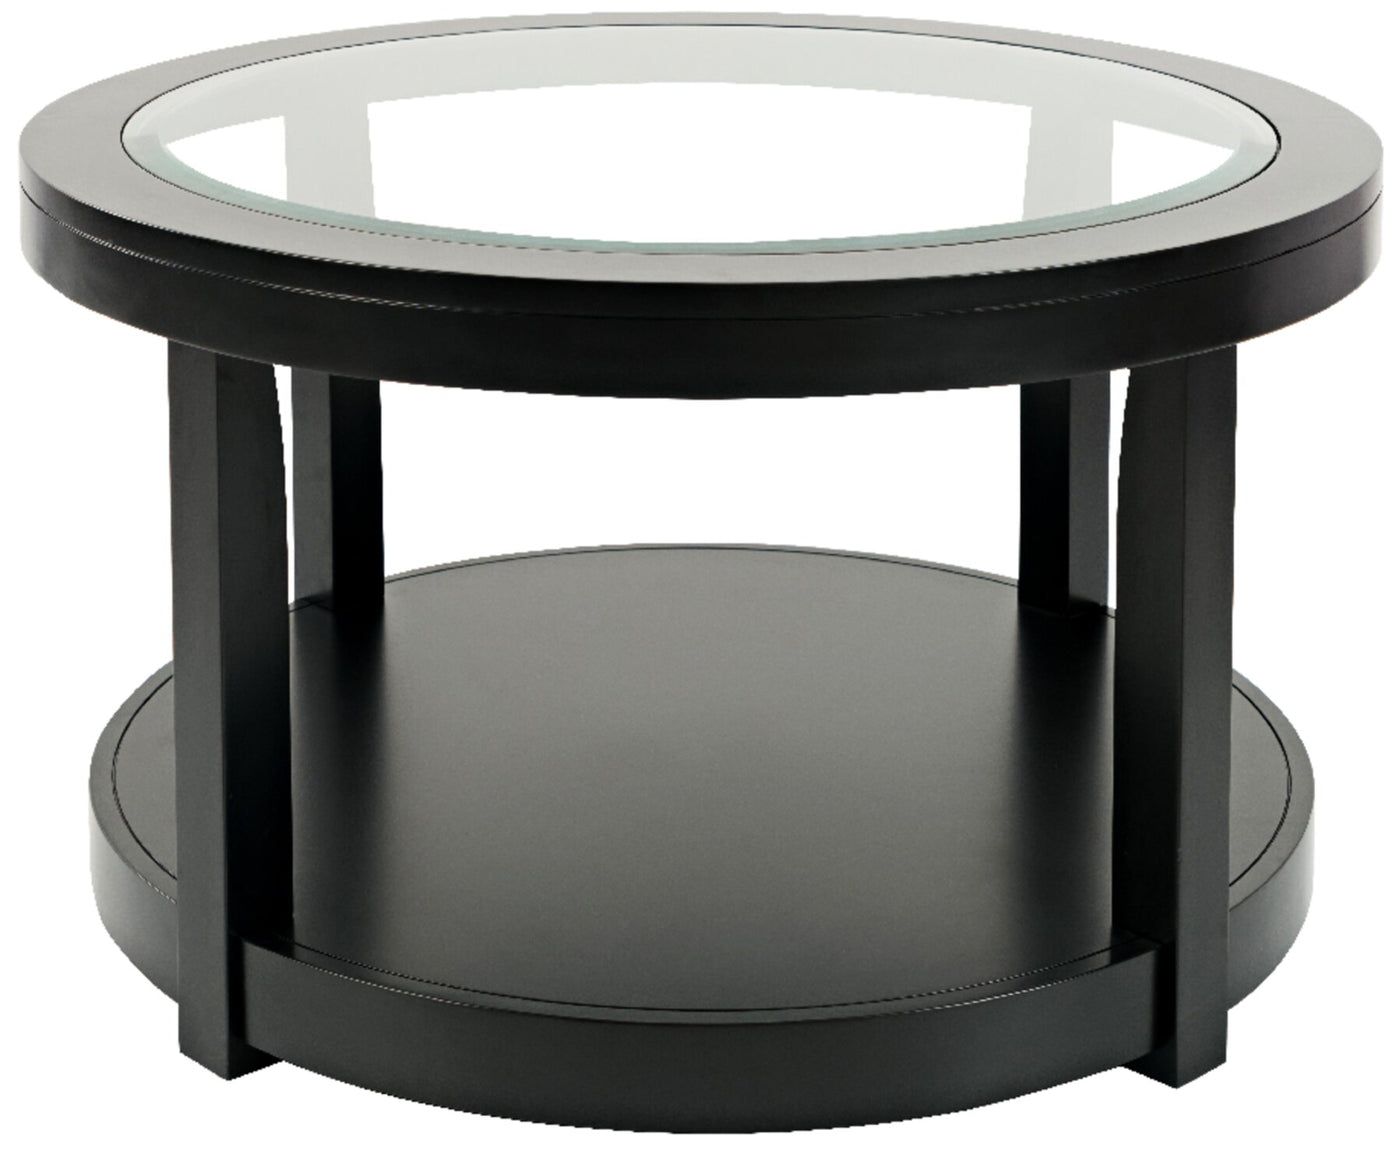 Corey Round Coffee Table – Black | The Brick Intended For Full Black Round Coffee Tables (Gallery 19 of 20)